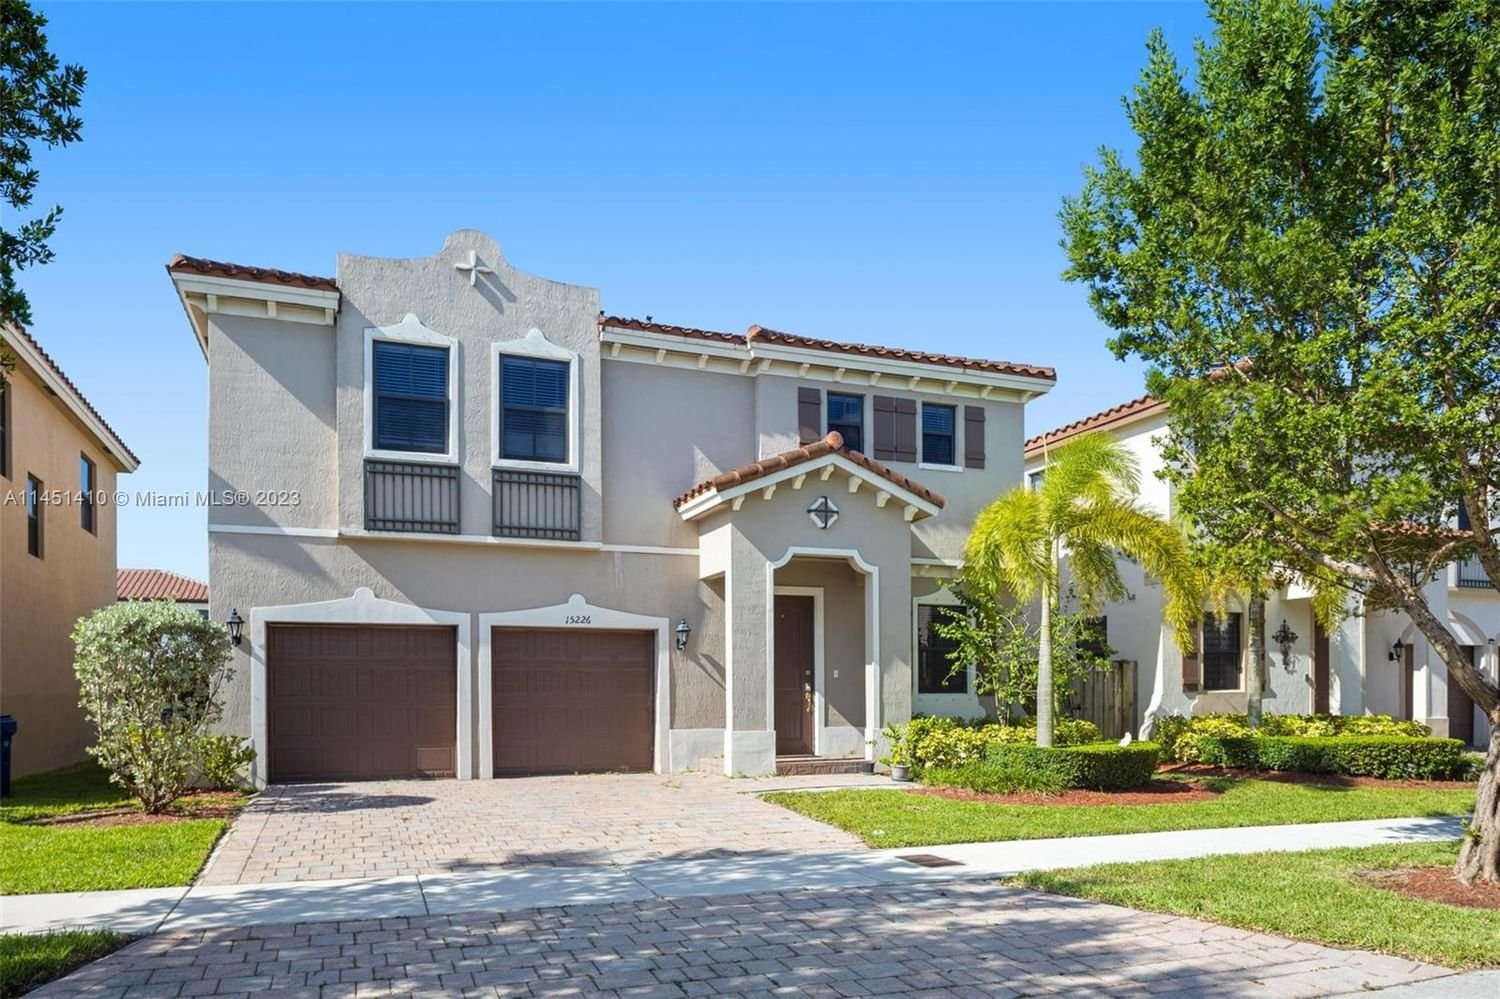 Real estate property located at 15226 173rd Ln, Miami-Dade County, Miami, FL